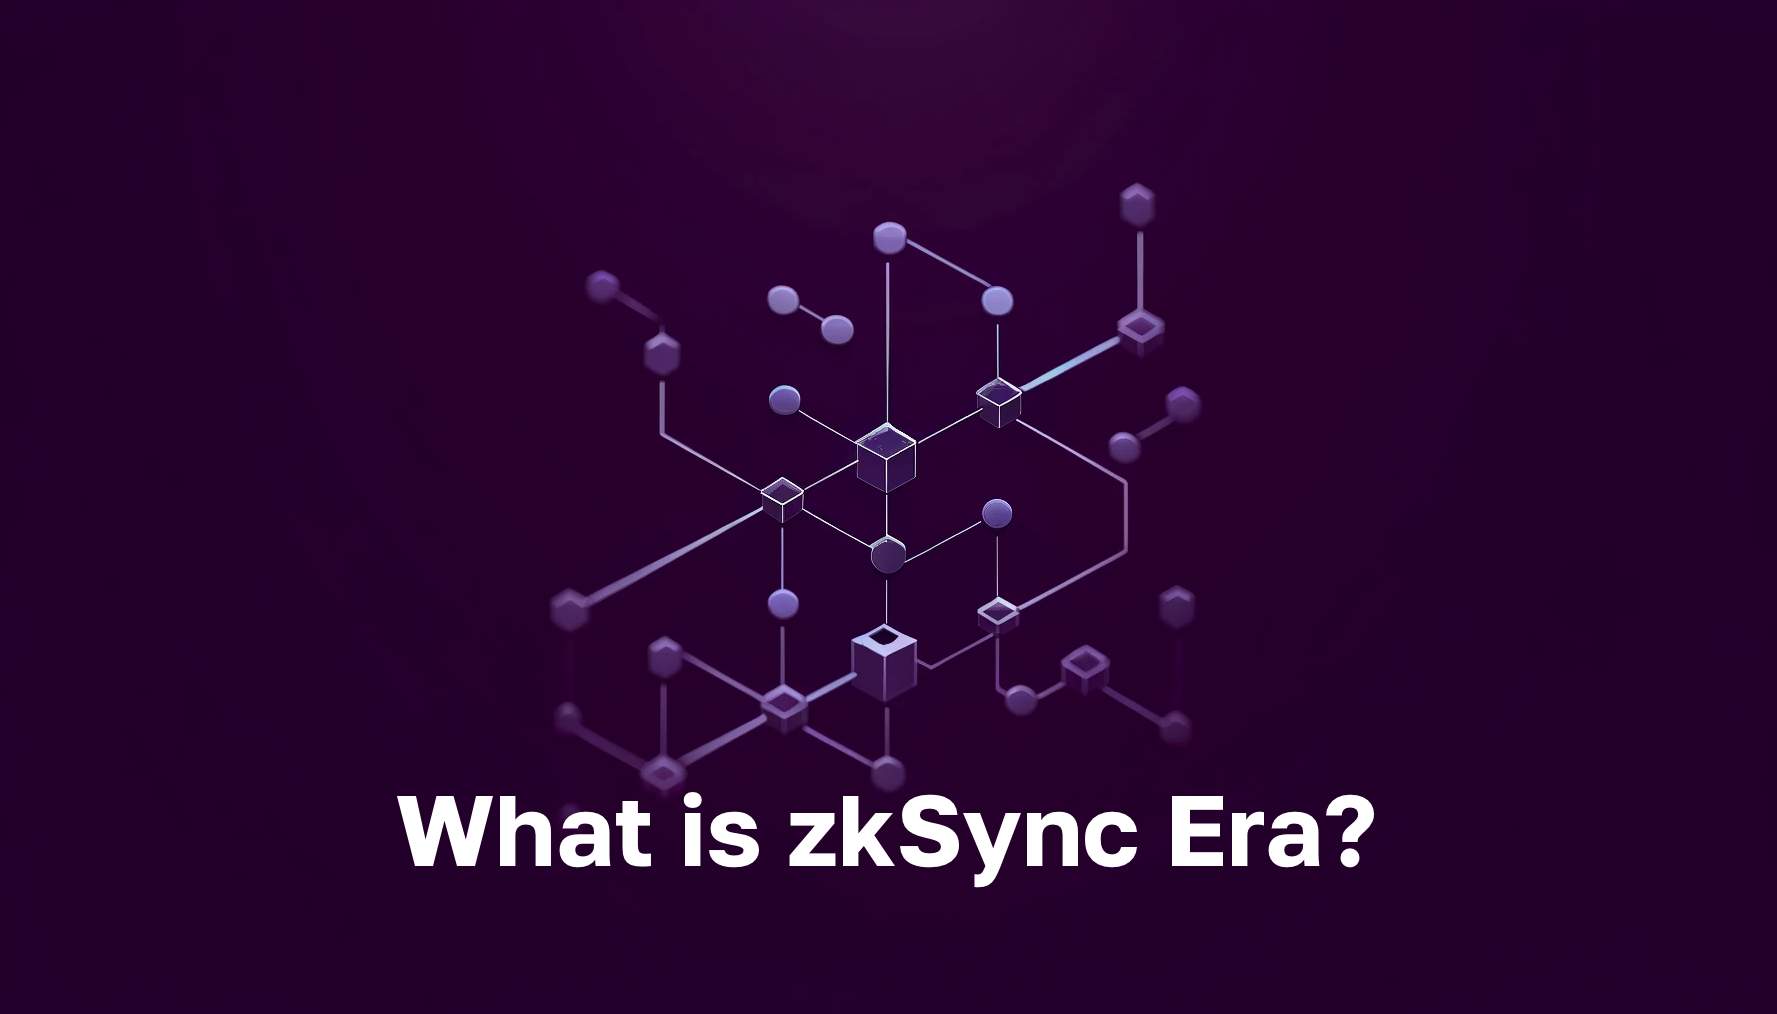 Blockchain illustration with text: "What is zkSync Era?"